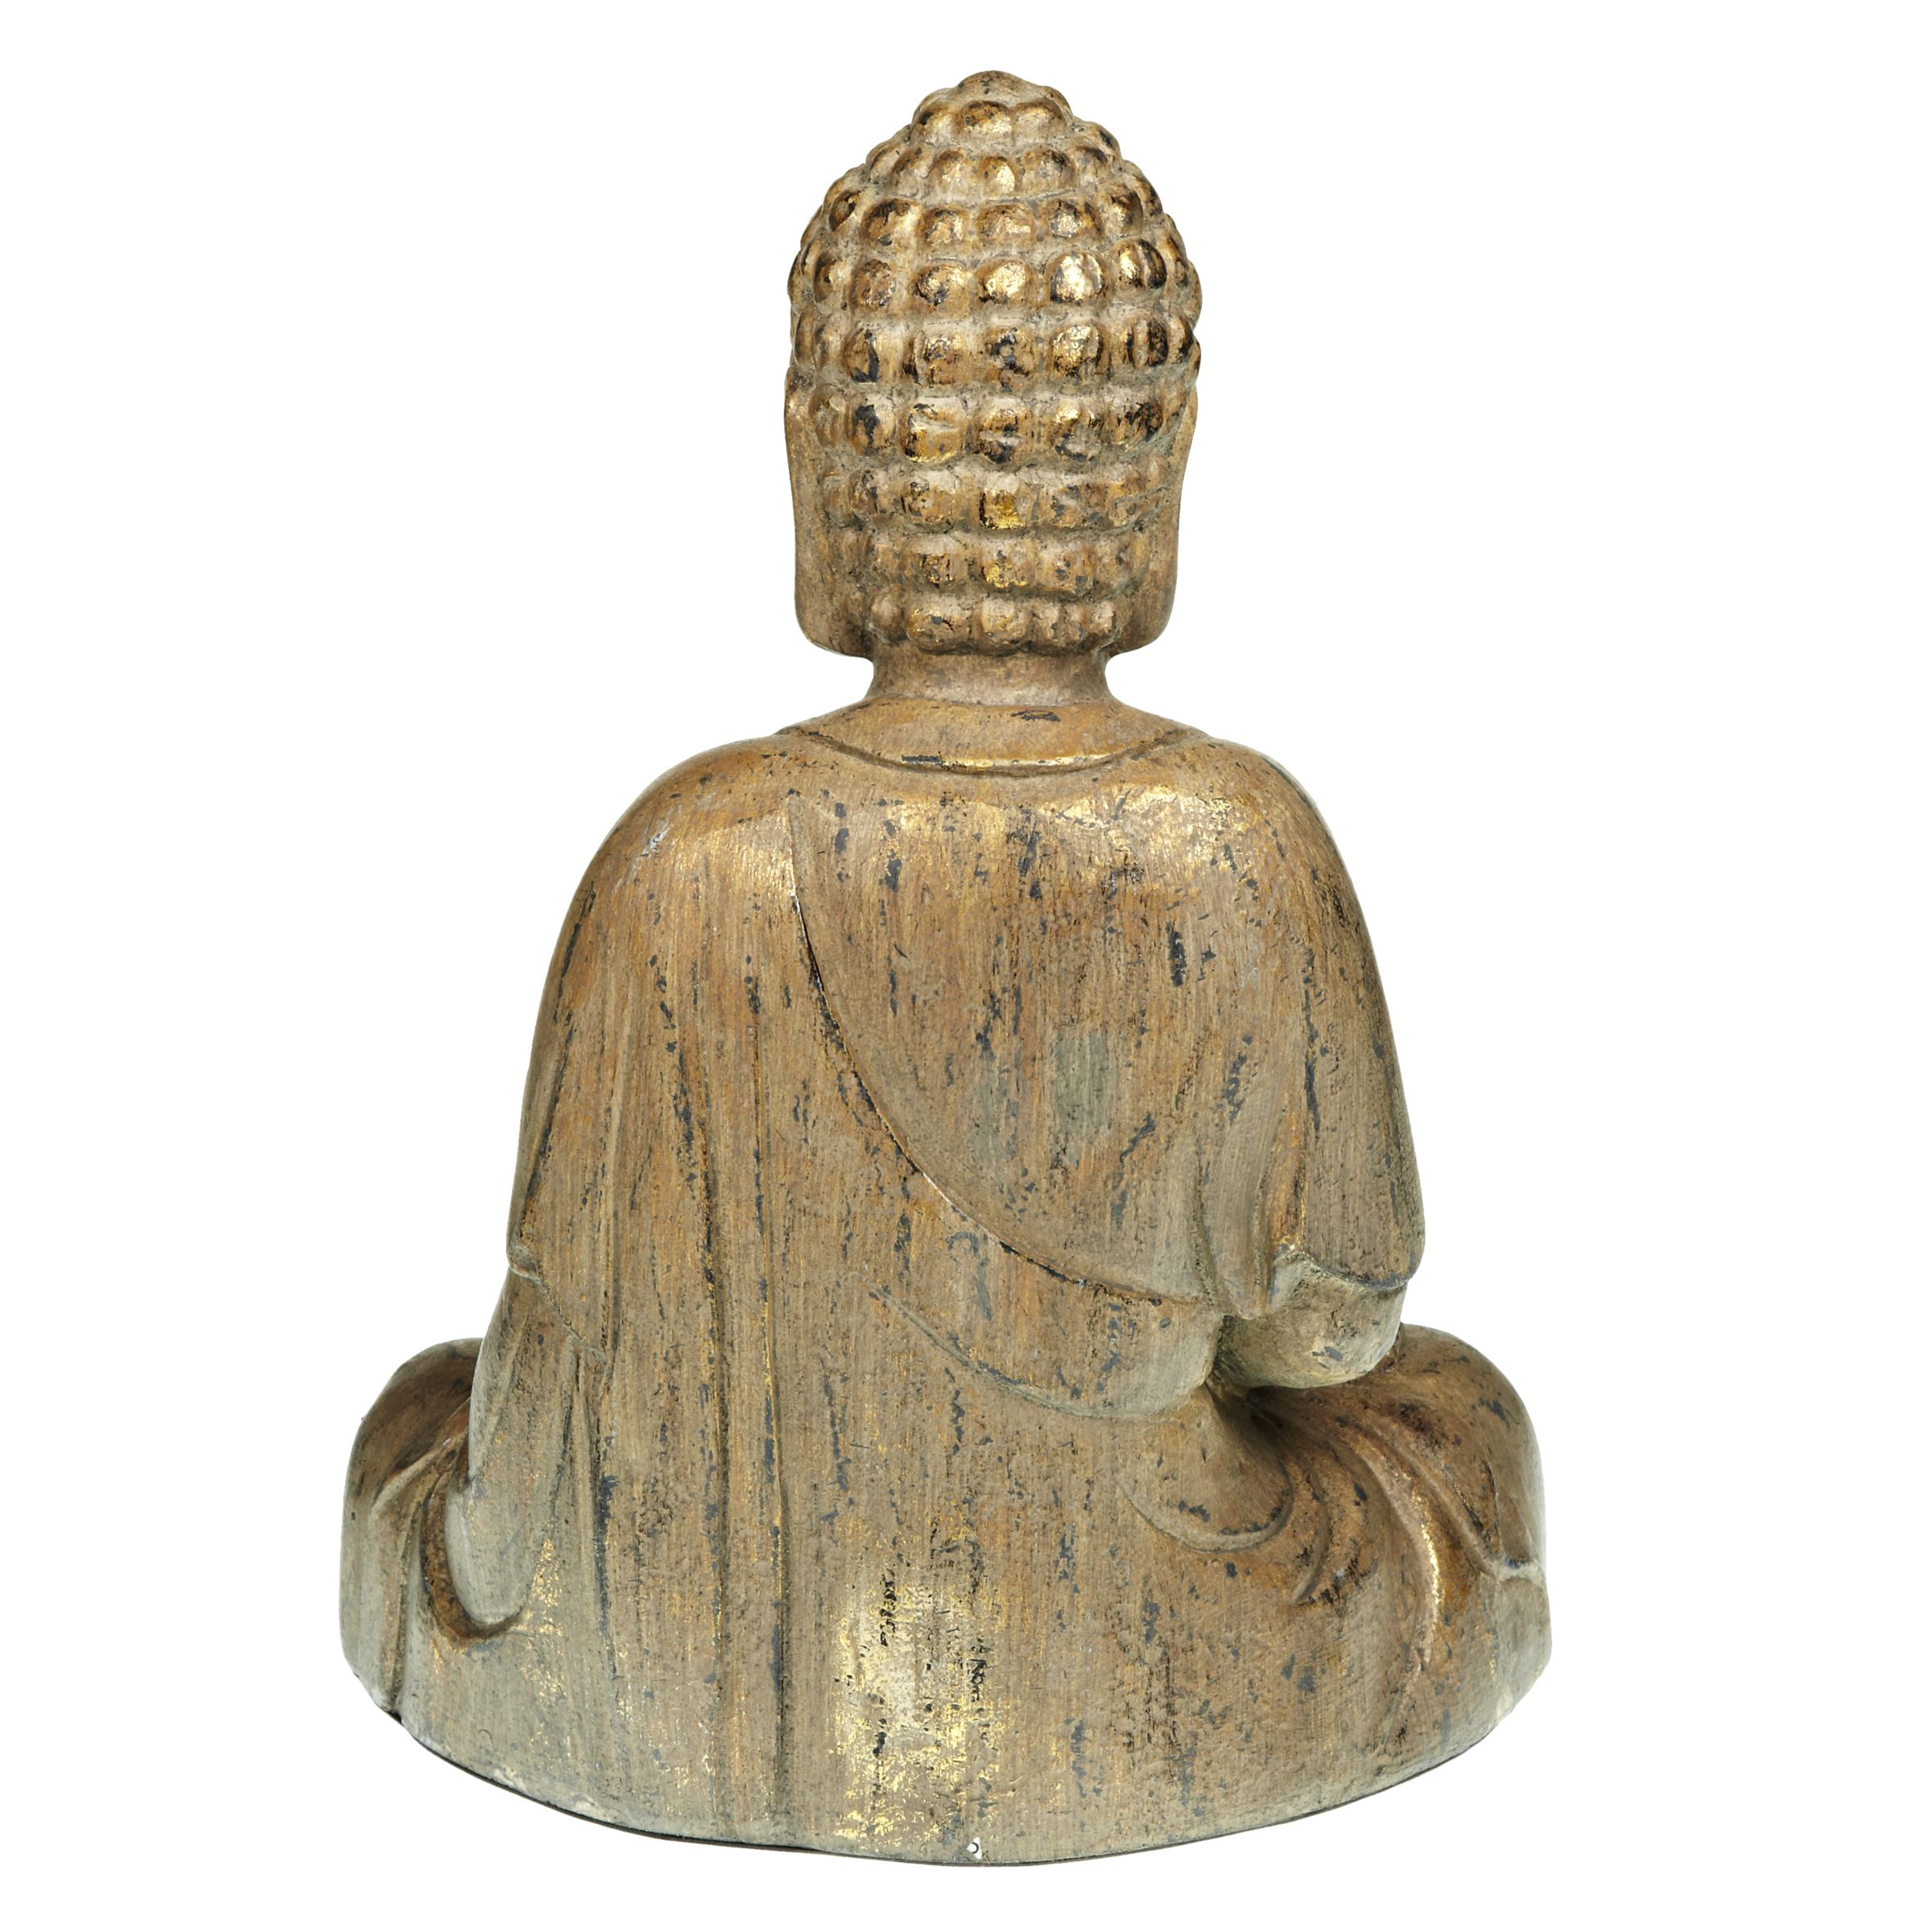 John Lewis & Partners Sitting Buddha Ornament, Gold